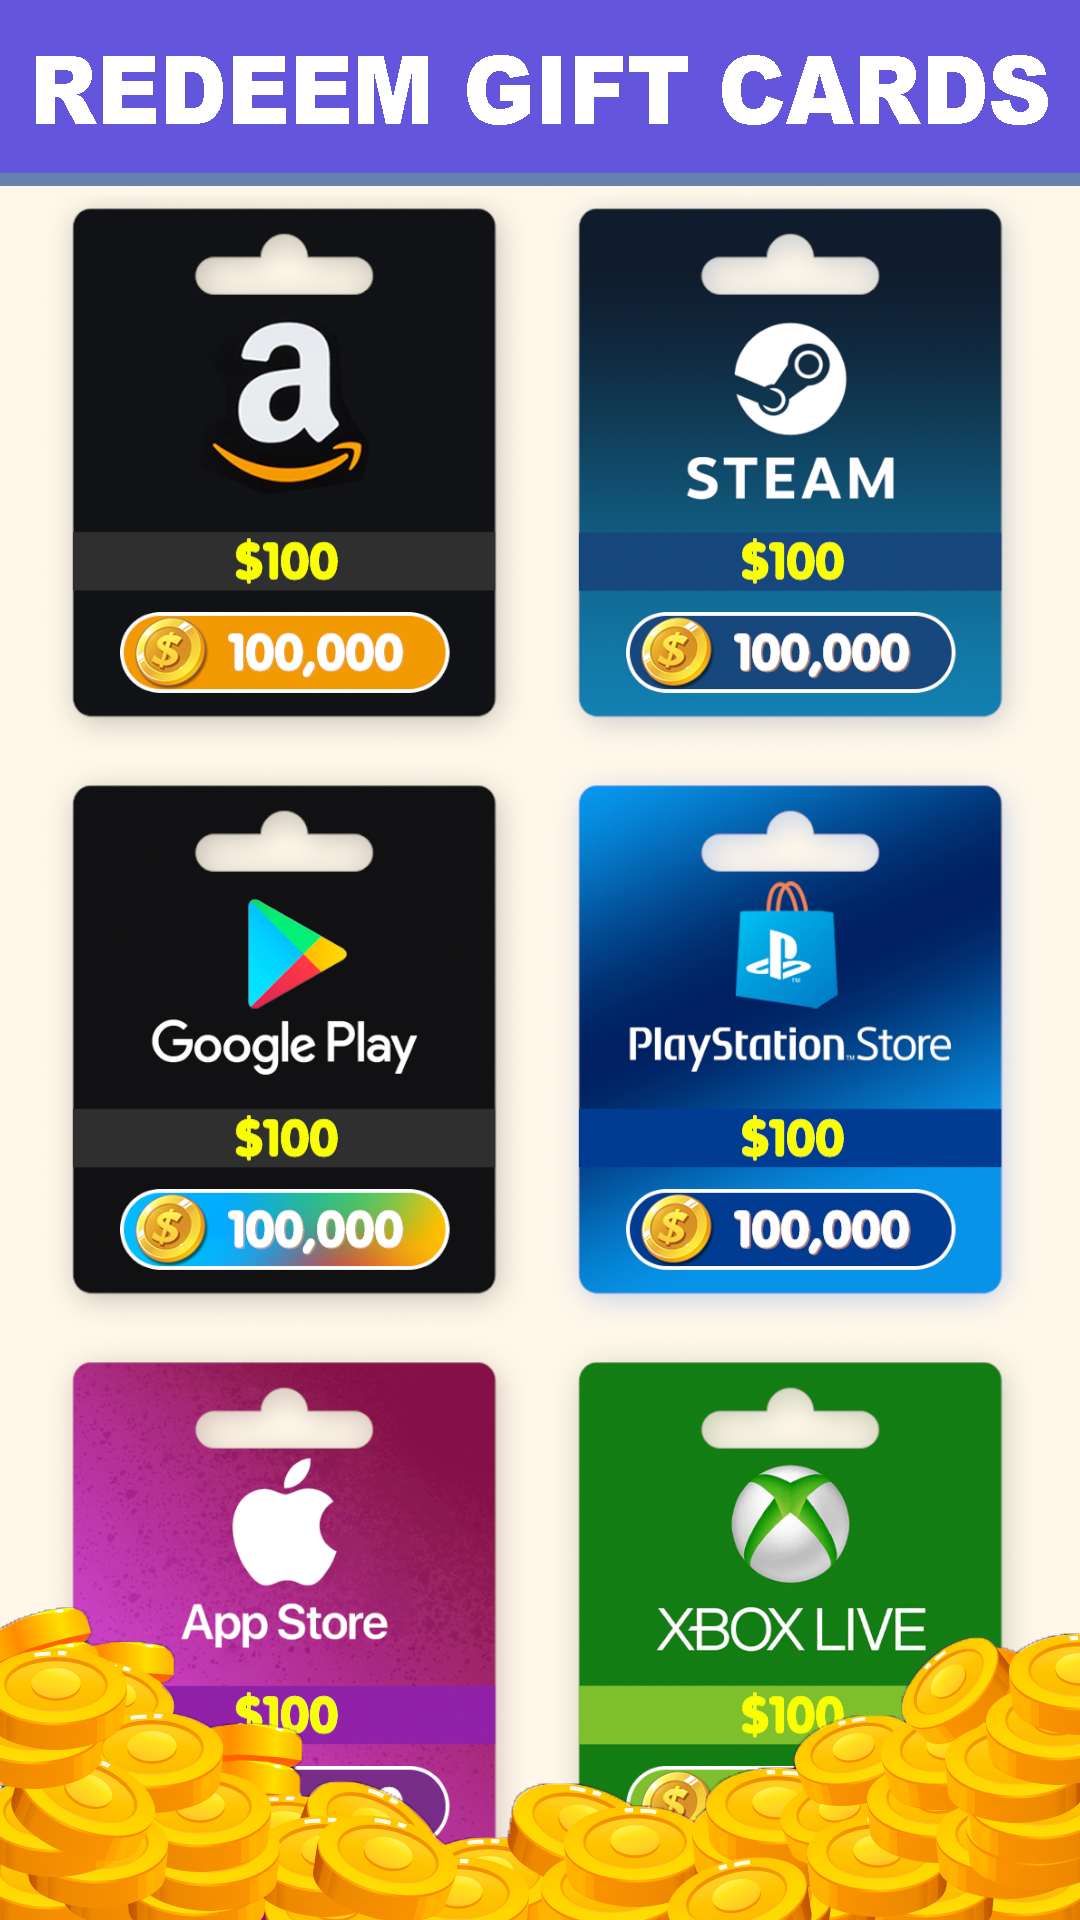 Cash Screw:Win Real Money screenshot game